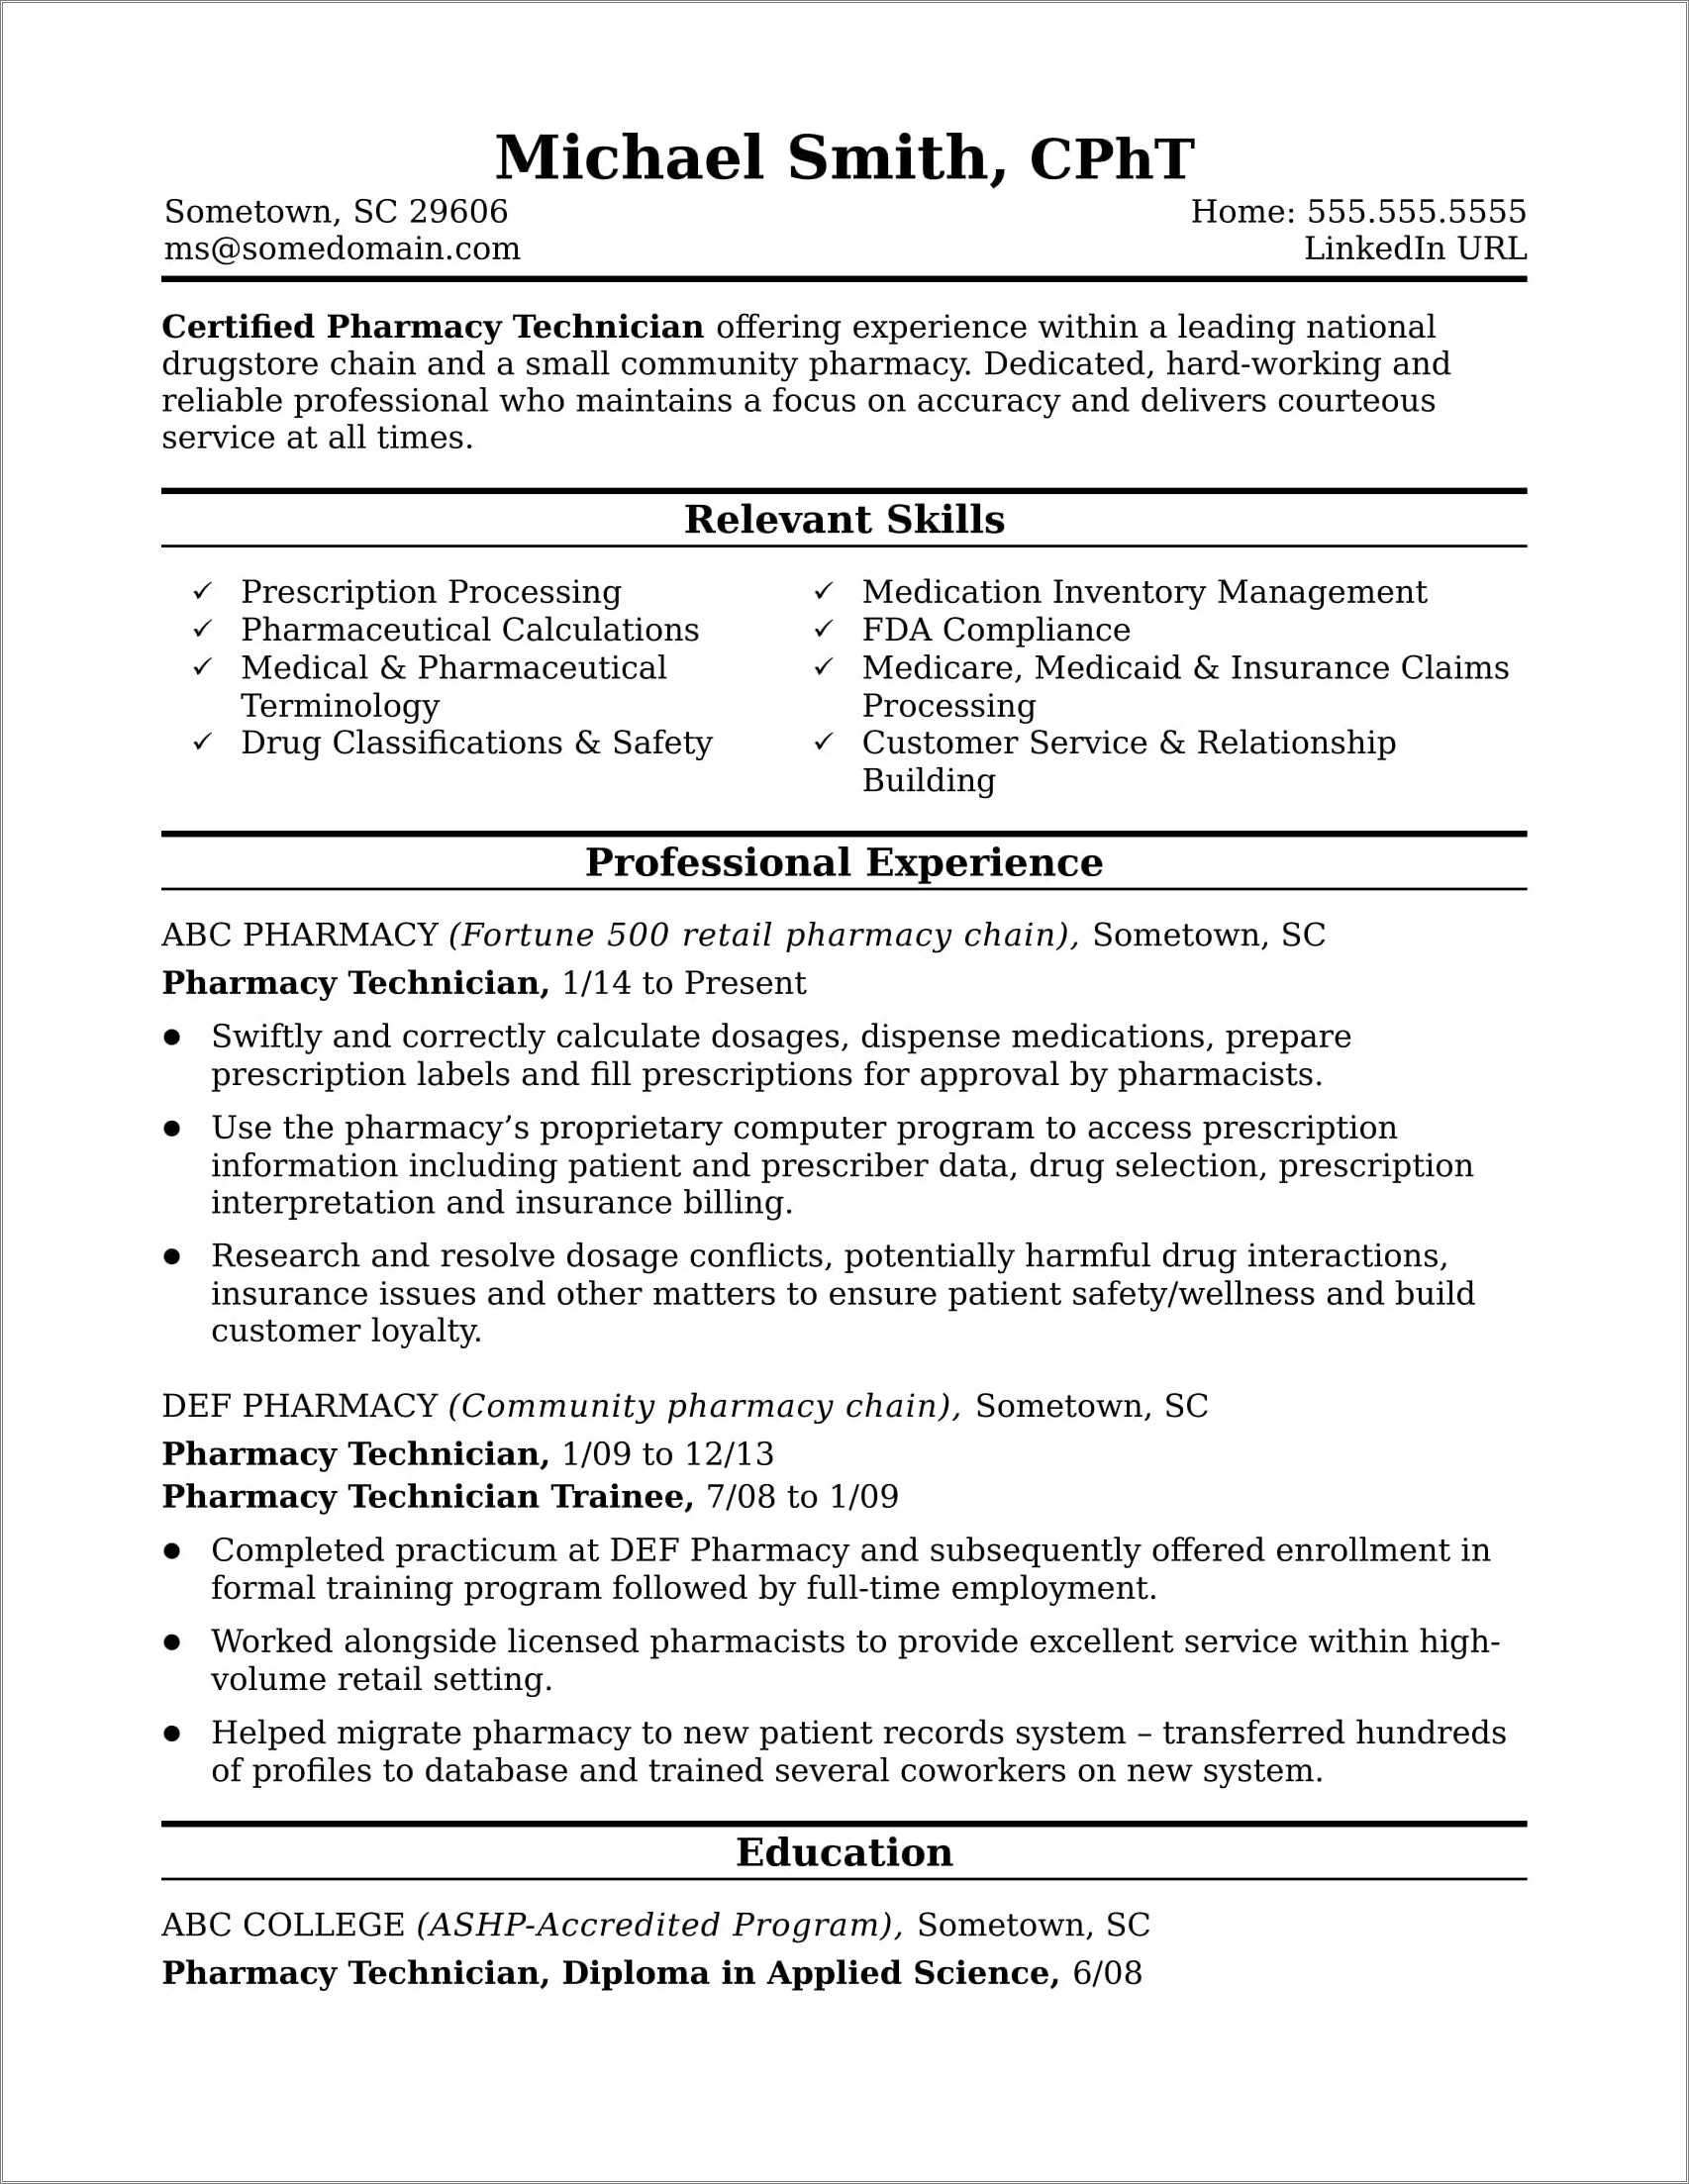 Resume Summary For Job Seeking